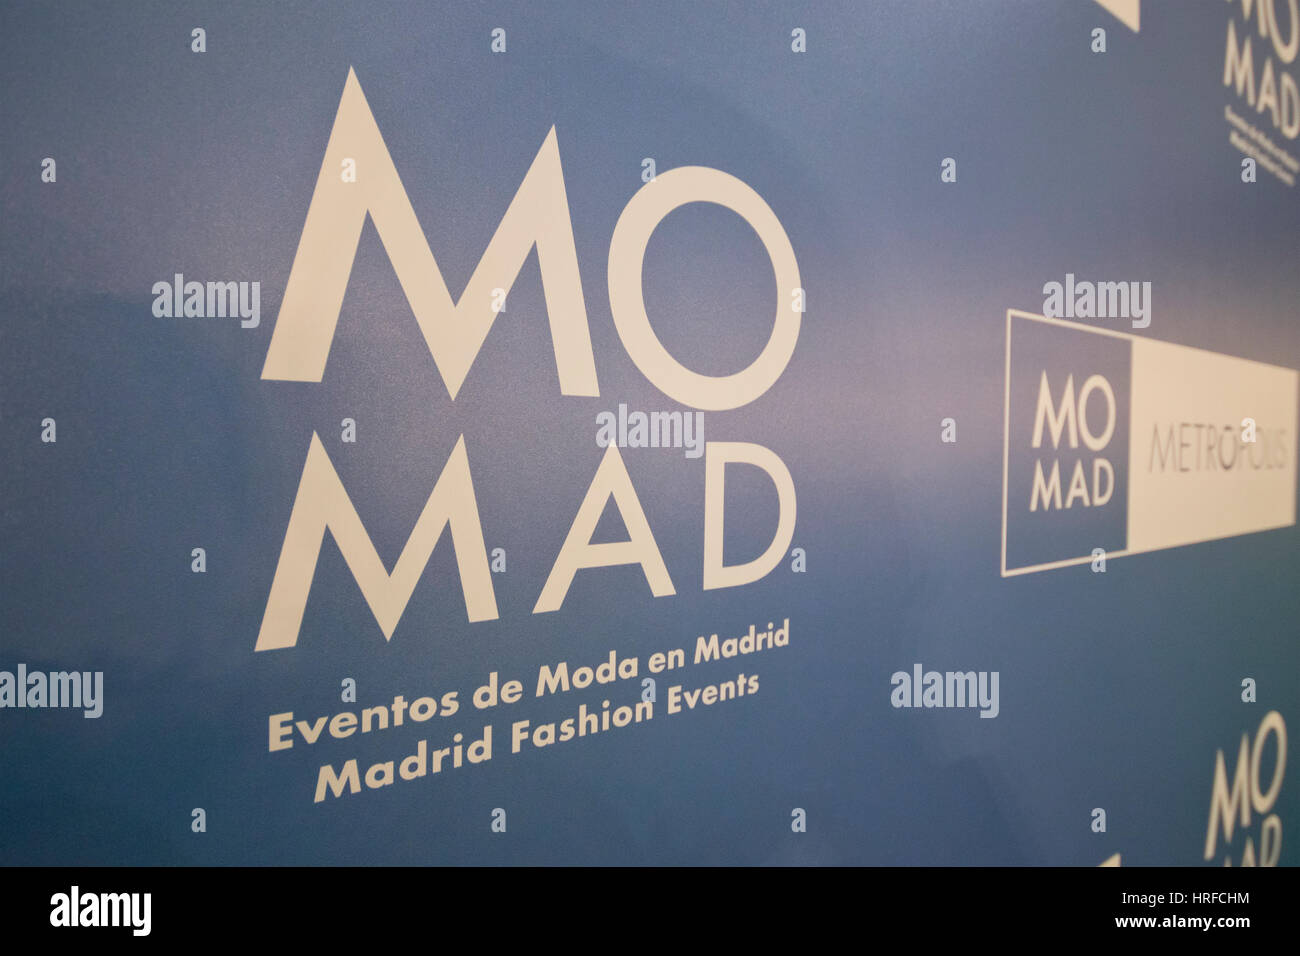 International fashion trade show MOMAD logo Ifema 2017. Madrid (Spain). Stock Photo